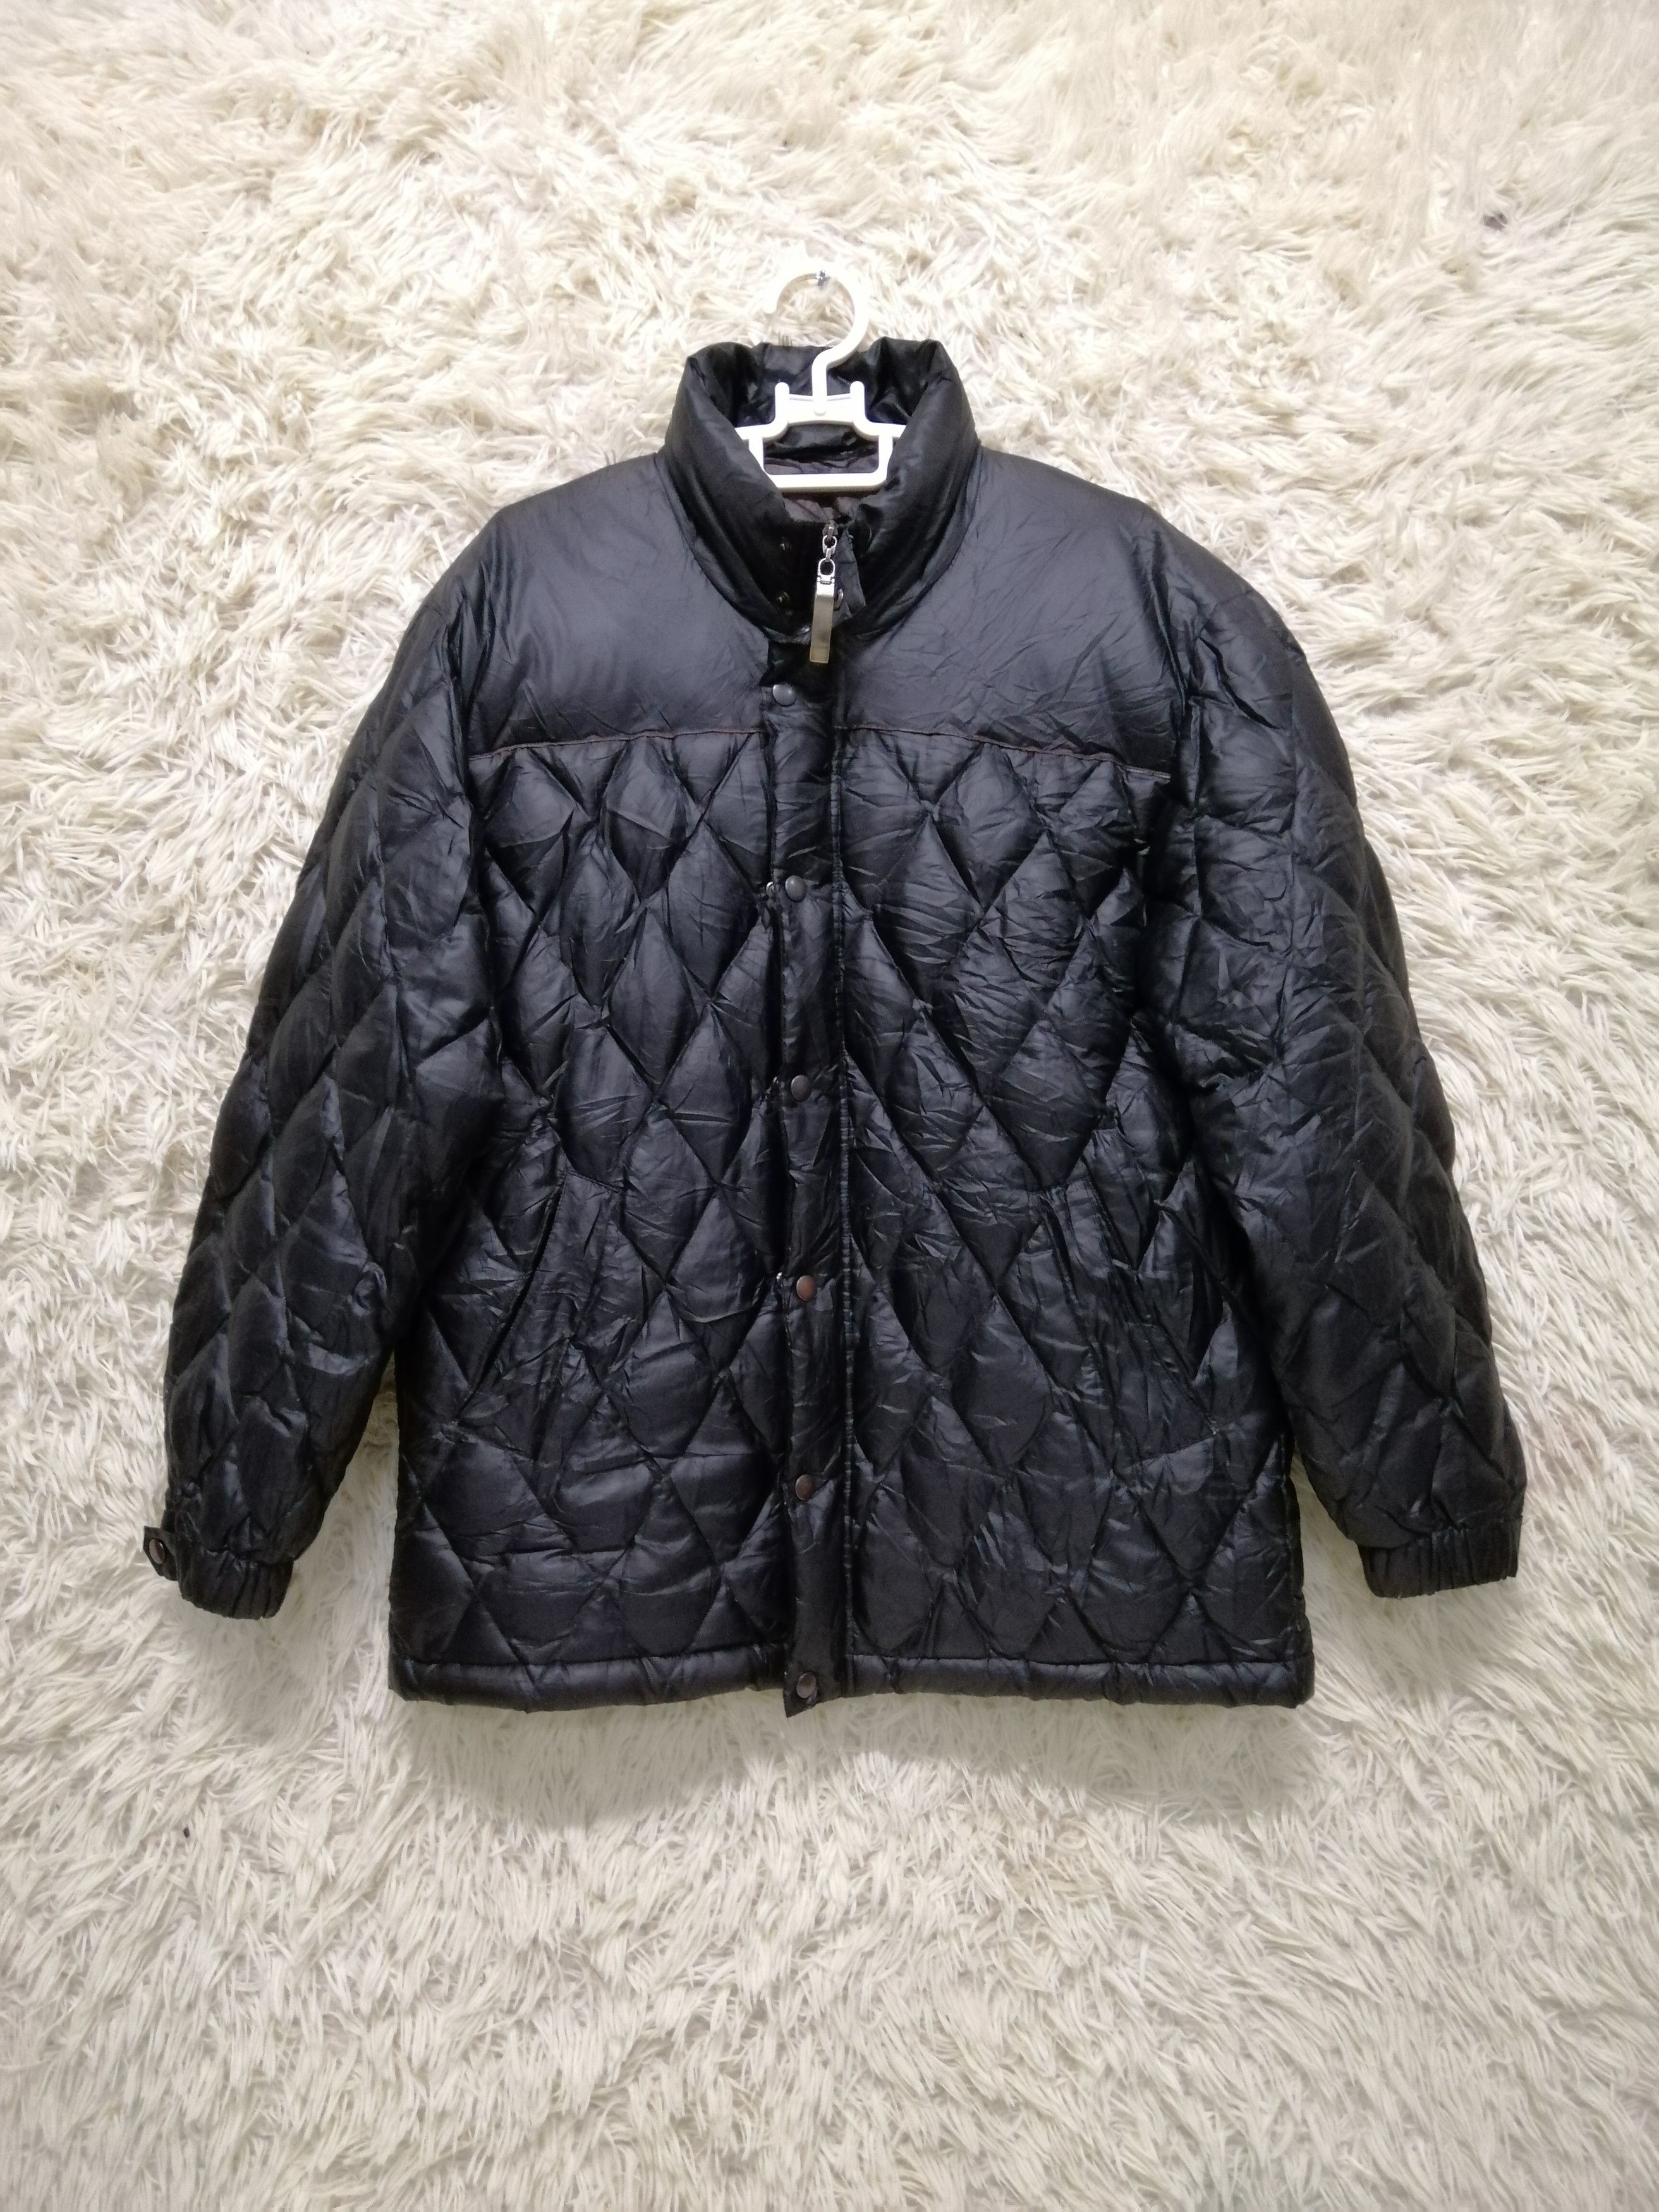 Japanese Brand Japanese Brand FKYM JAPAN Bomber Jacket Black | Grailed